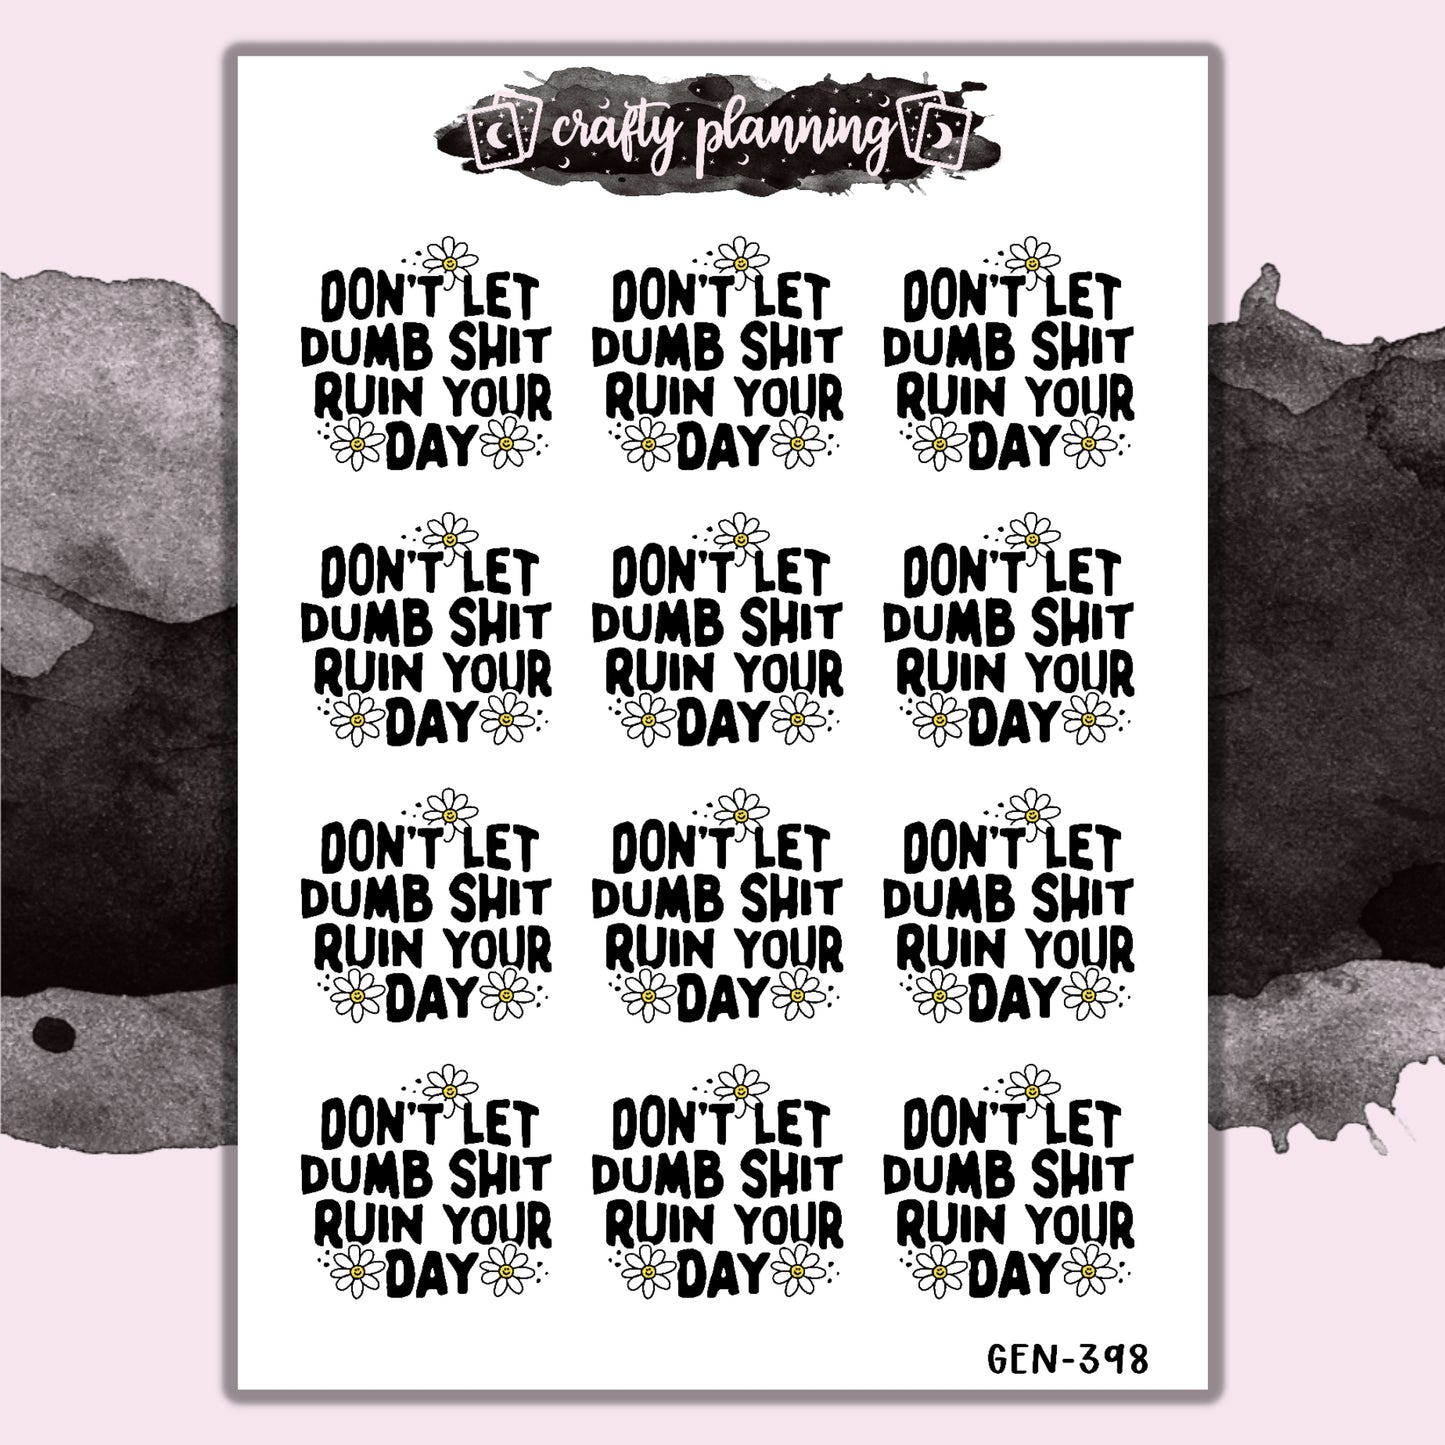 Don't Let Dumb Shit Ruin Your Day - Mini Sticker Sheet